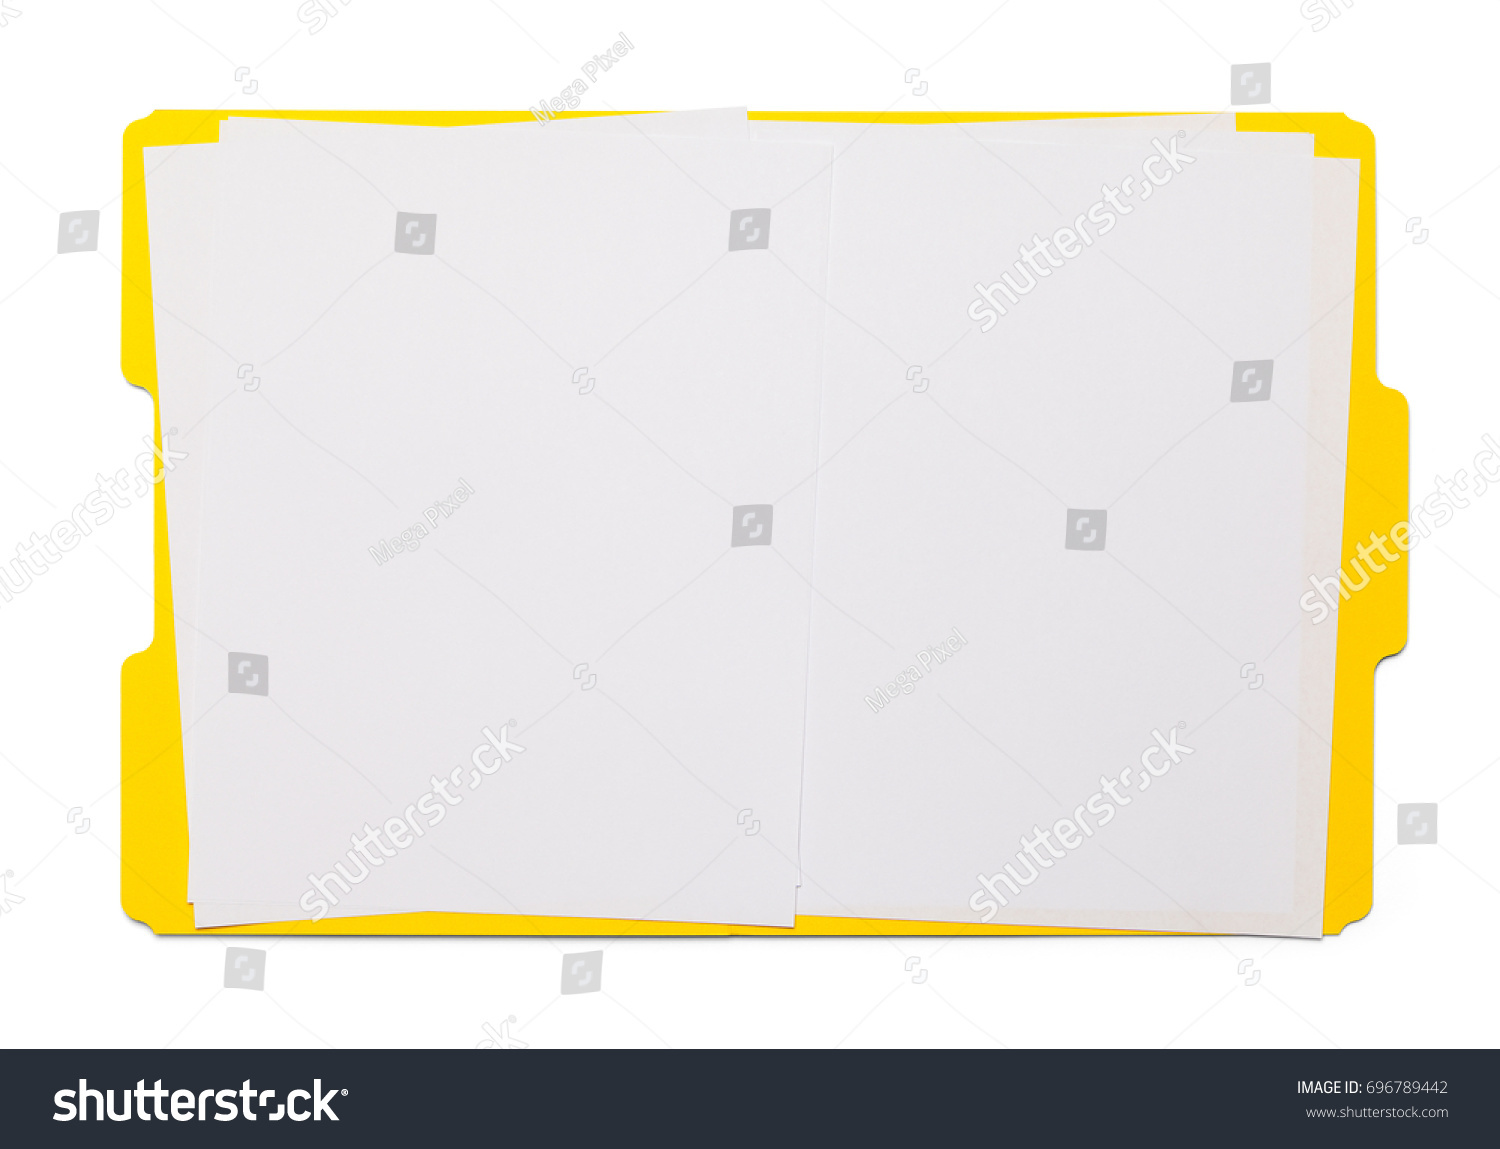 Open Yellow Folder Isolated on White Background. #696789442